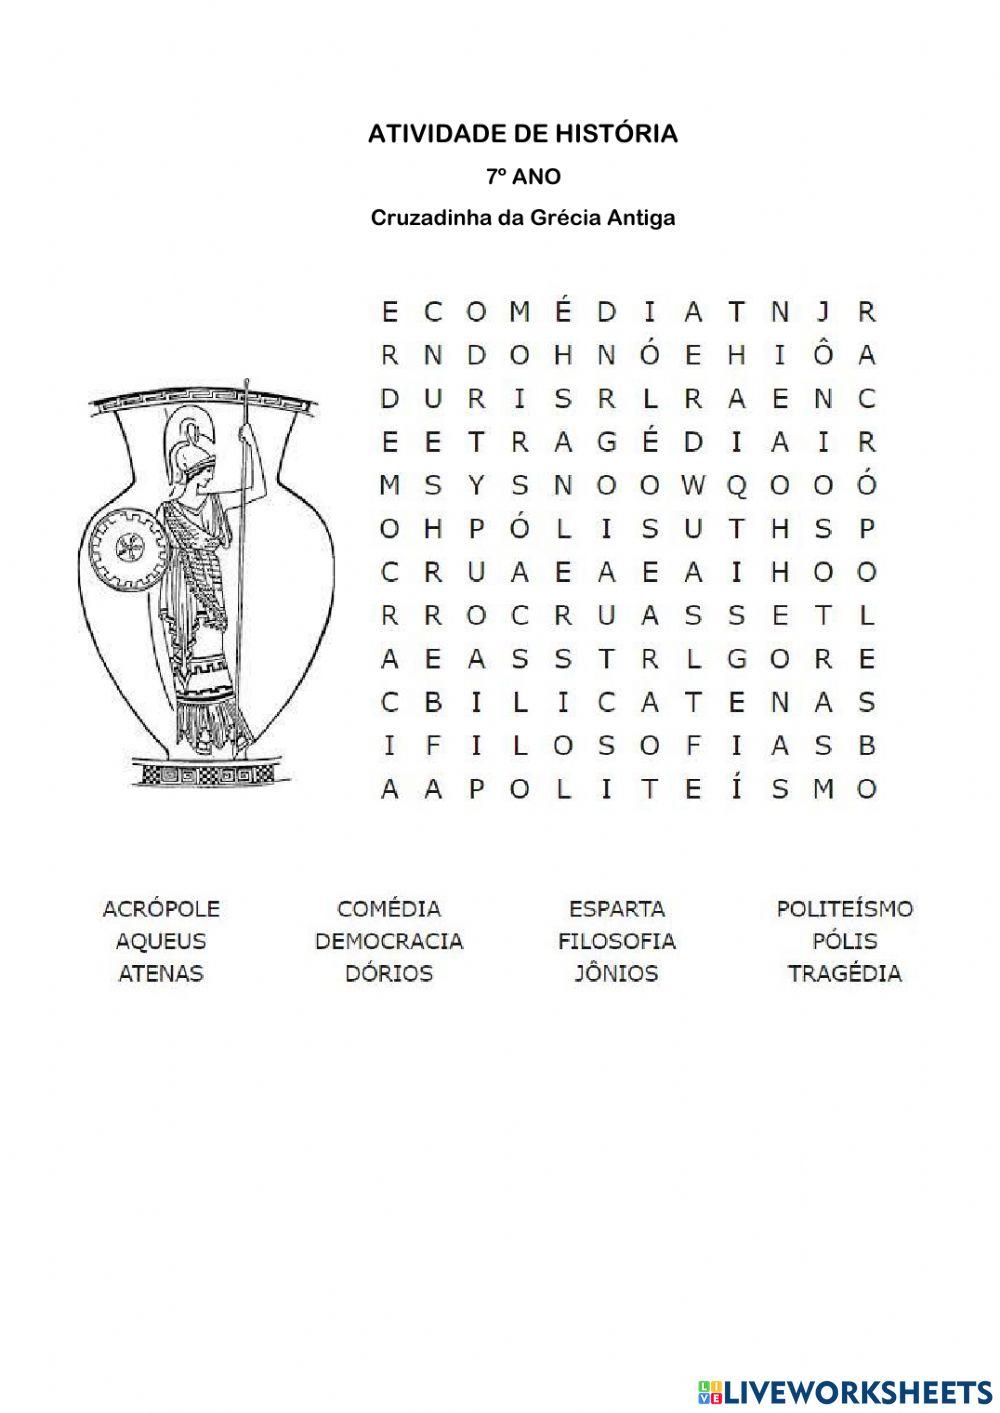 6 SÉRIE - cap 10 - a grecia antiga - atividades complementares (1), PDF, Esparta